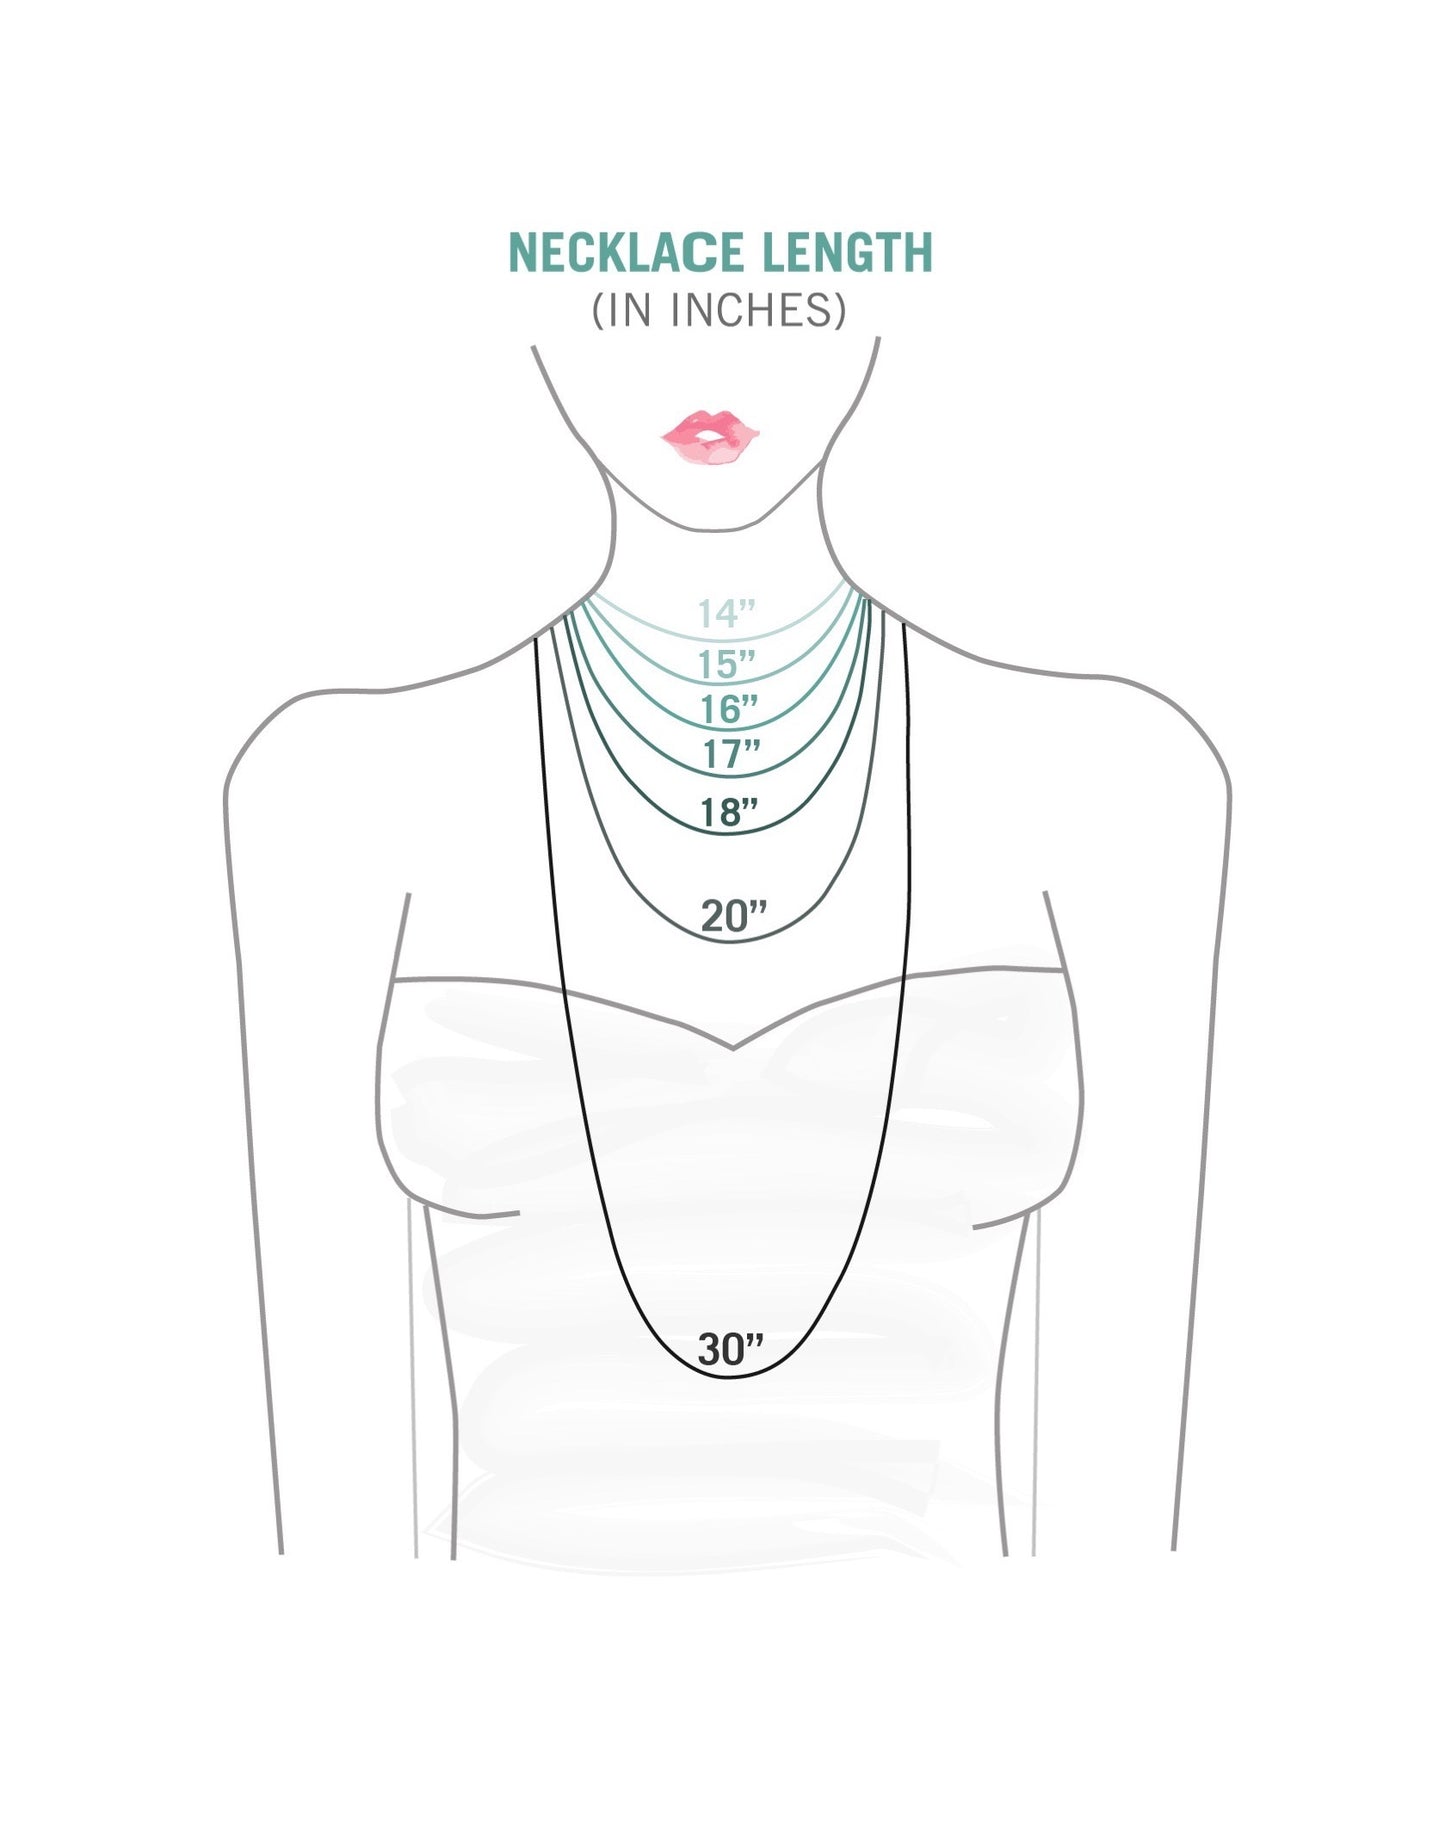 Freeform Pearl Necklace